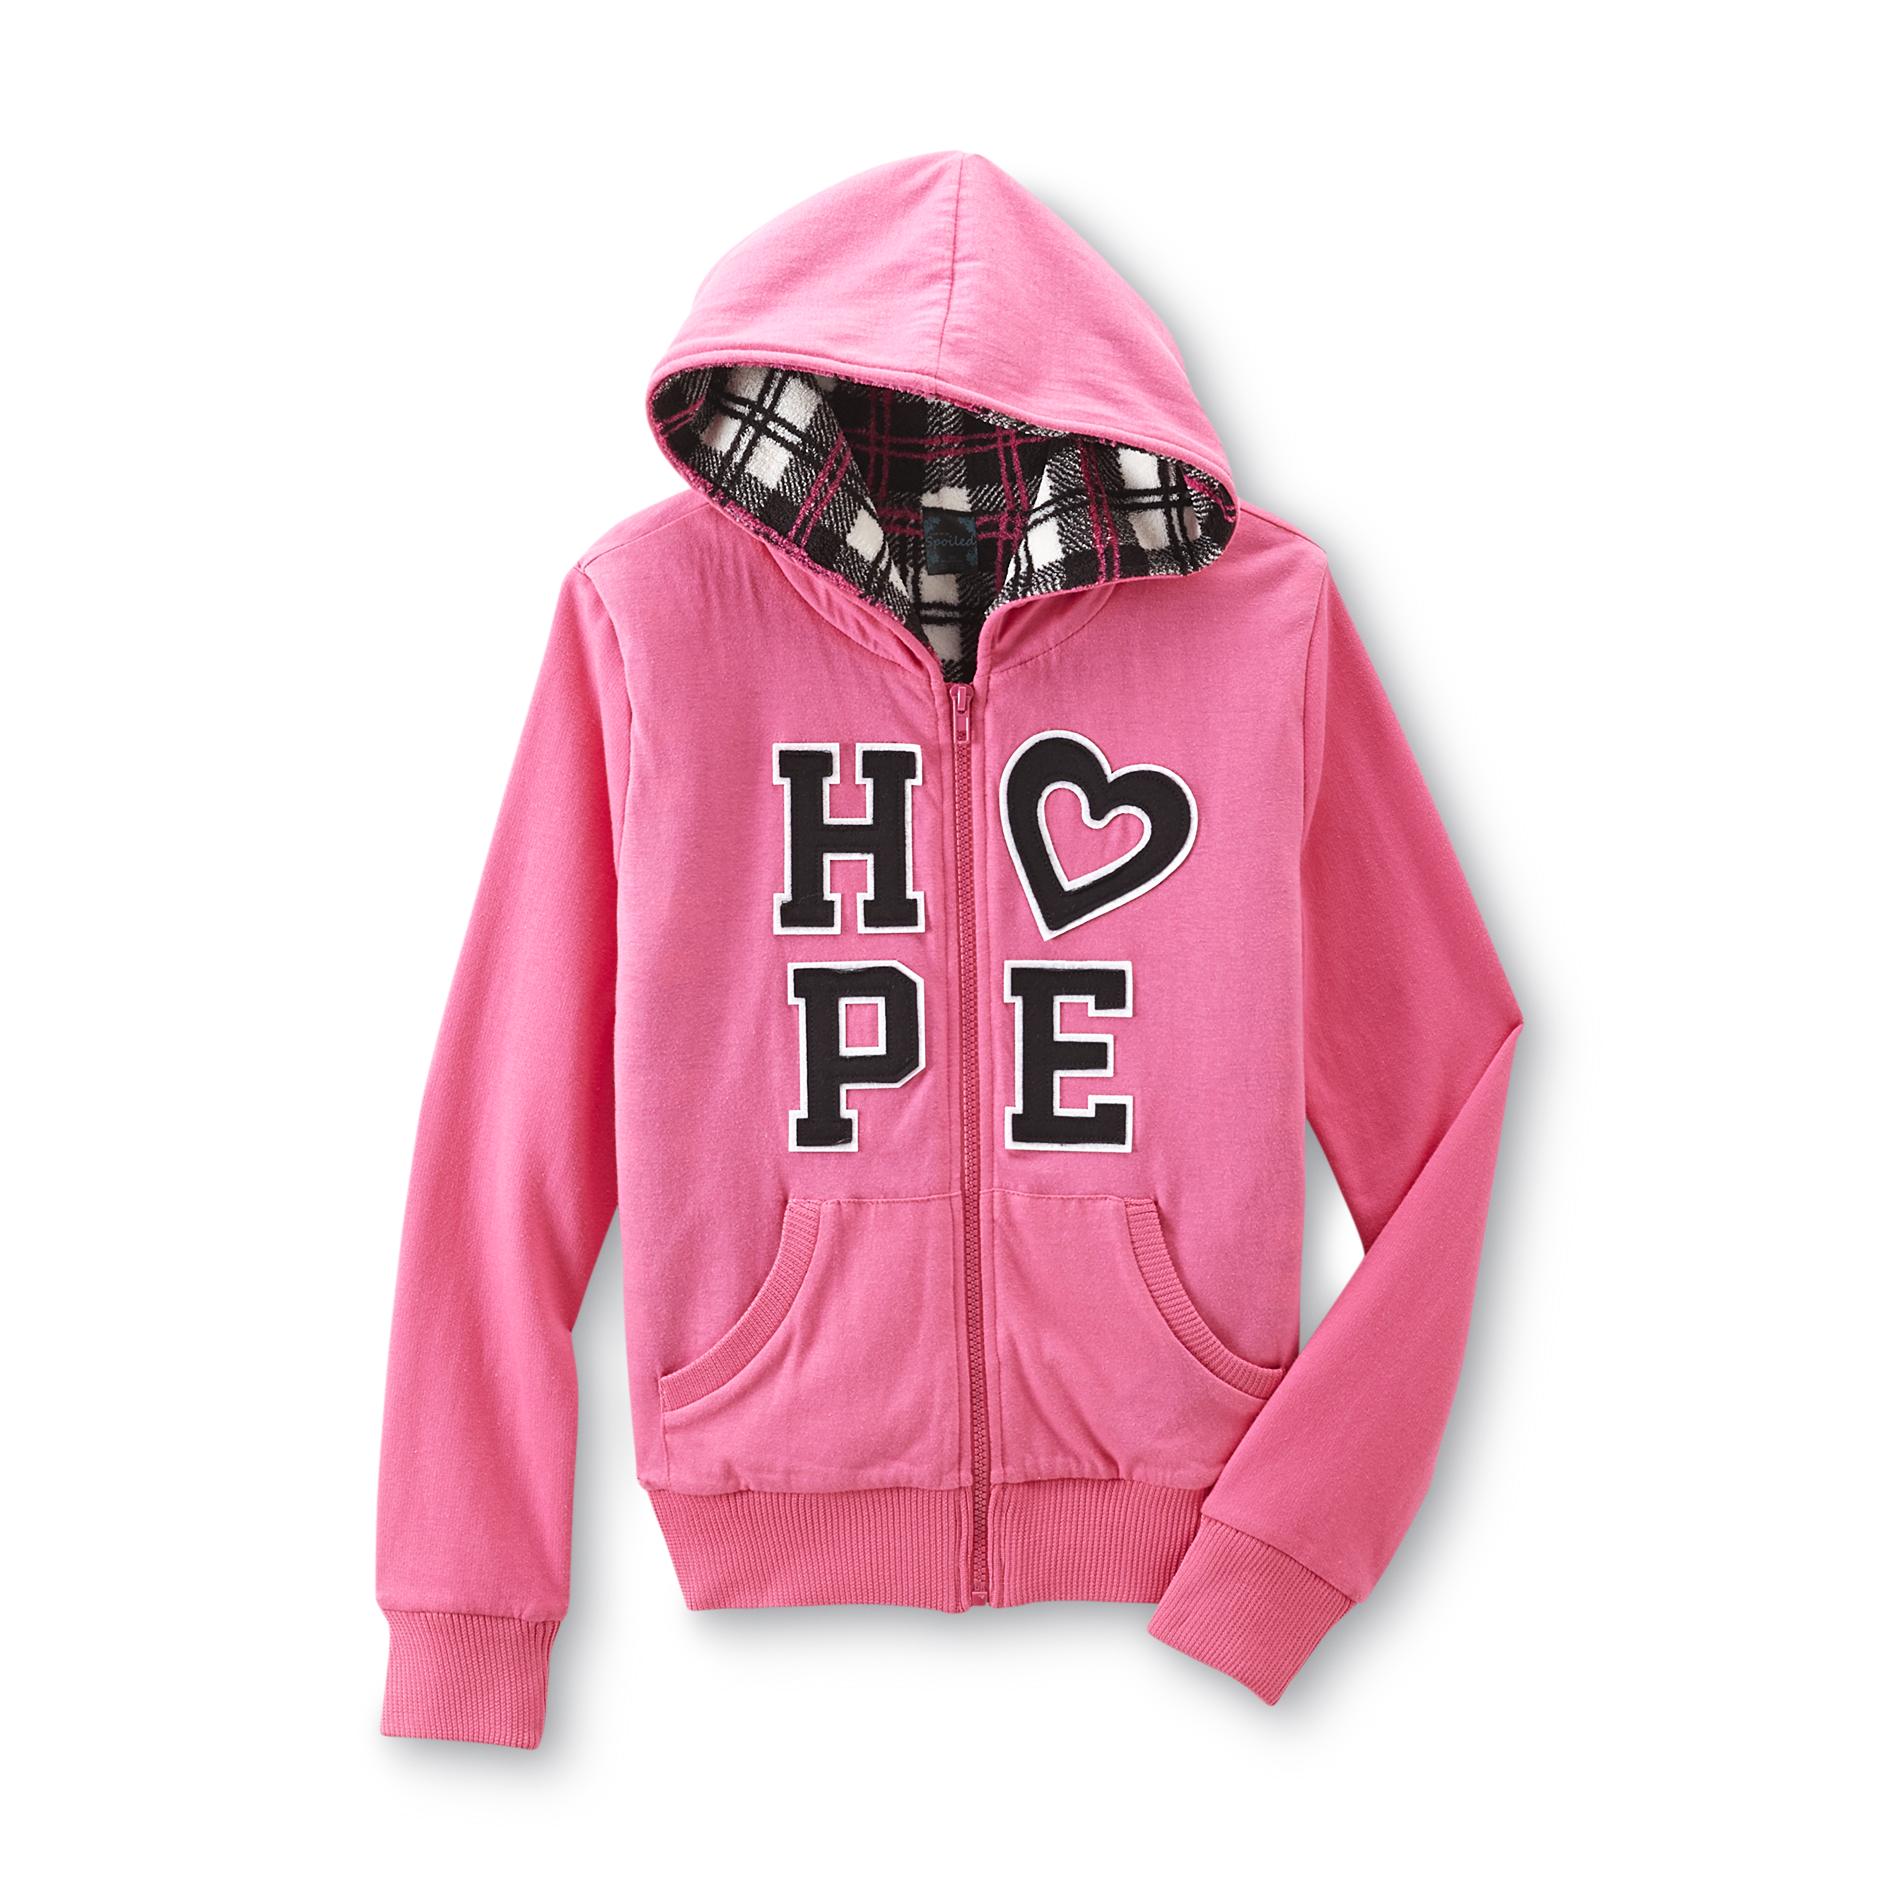 Mamba Girl's Hoodie Jacket - Hope